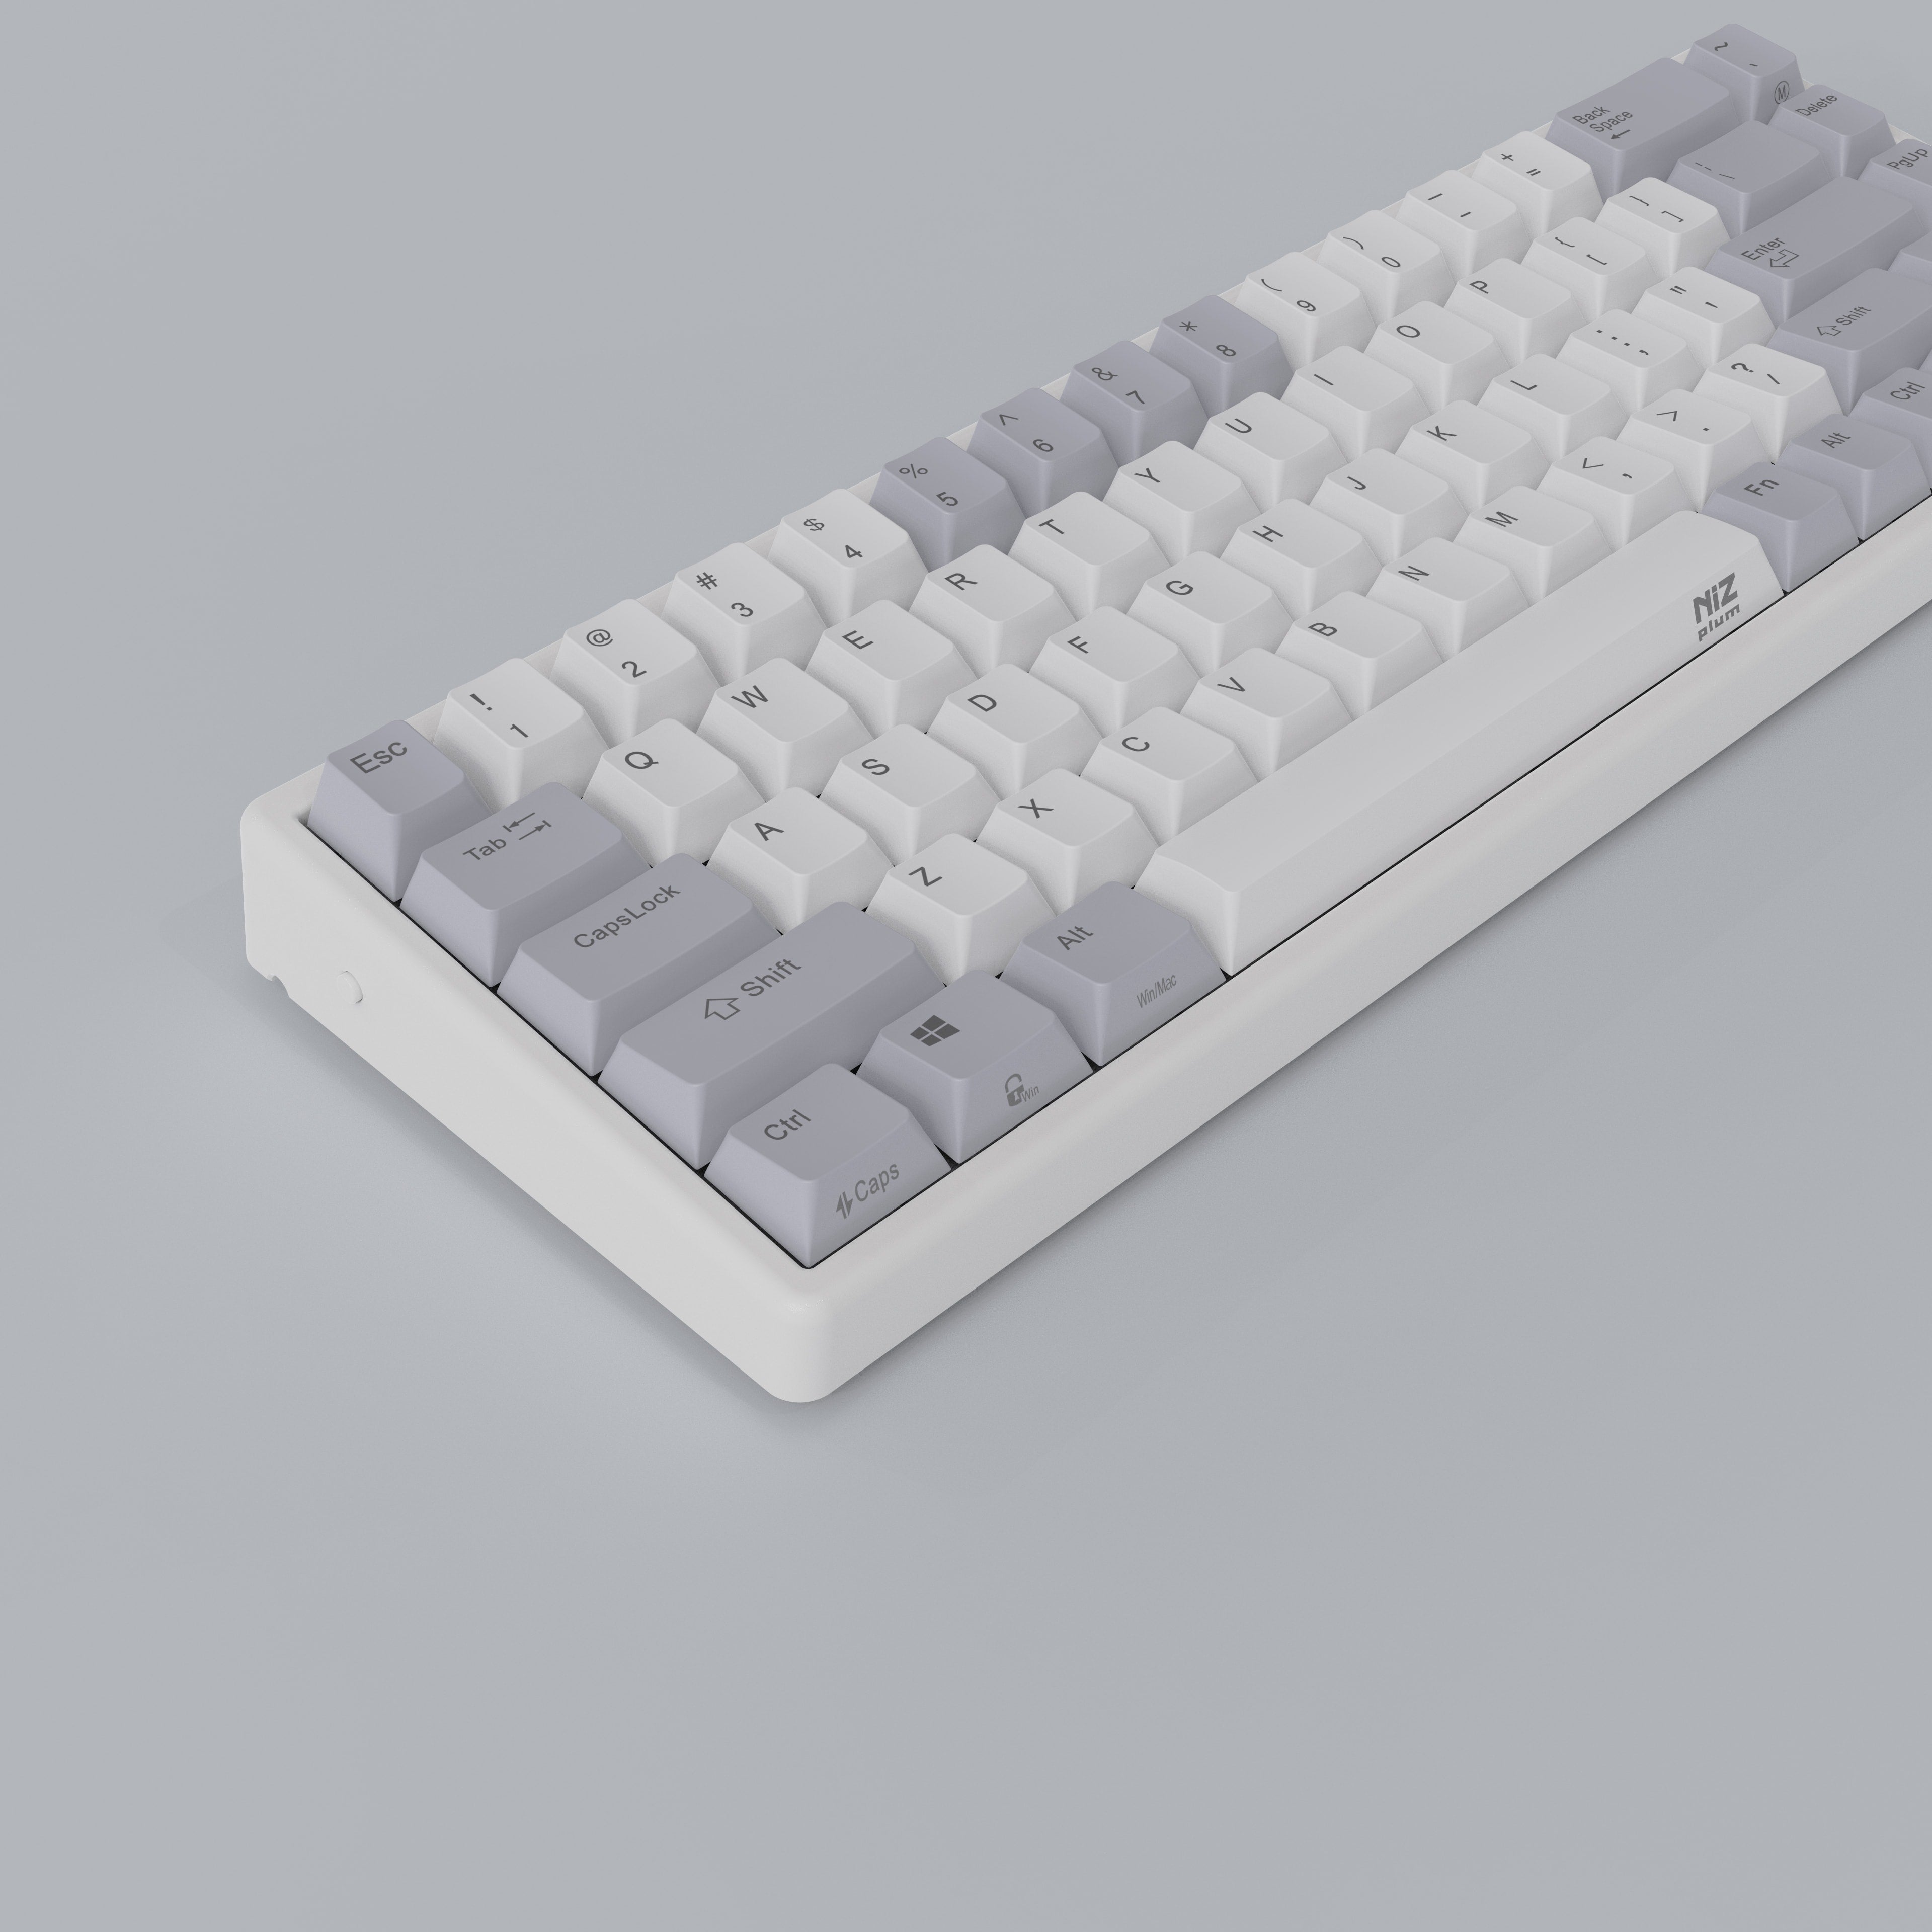 NIZ Keyboard ATOM 68 Capacitive Keyboard